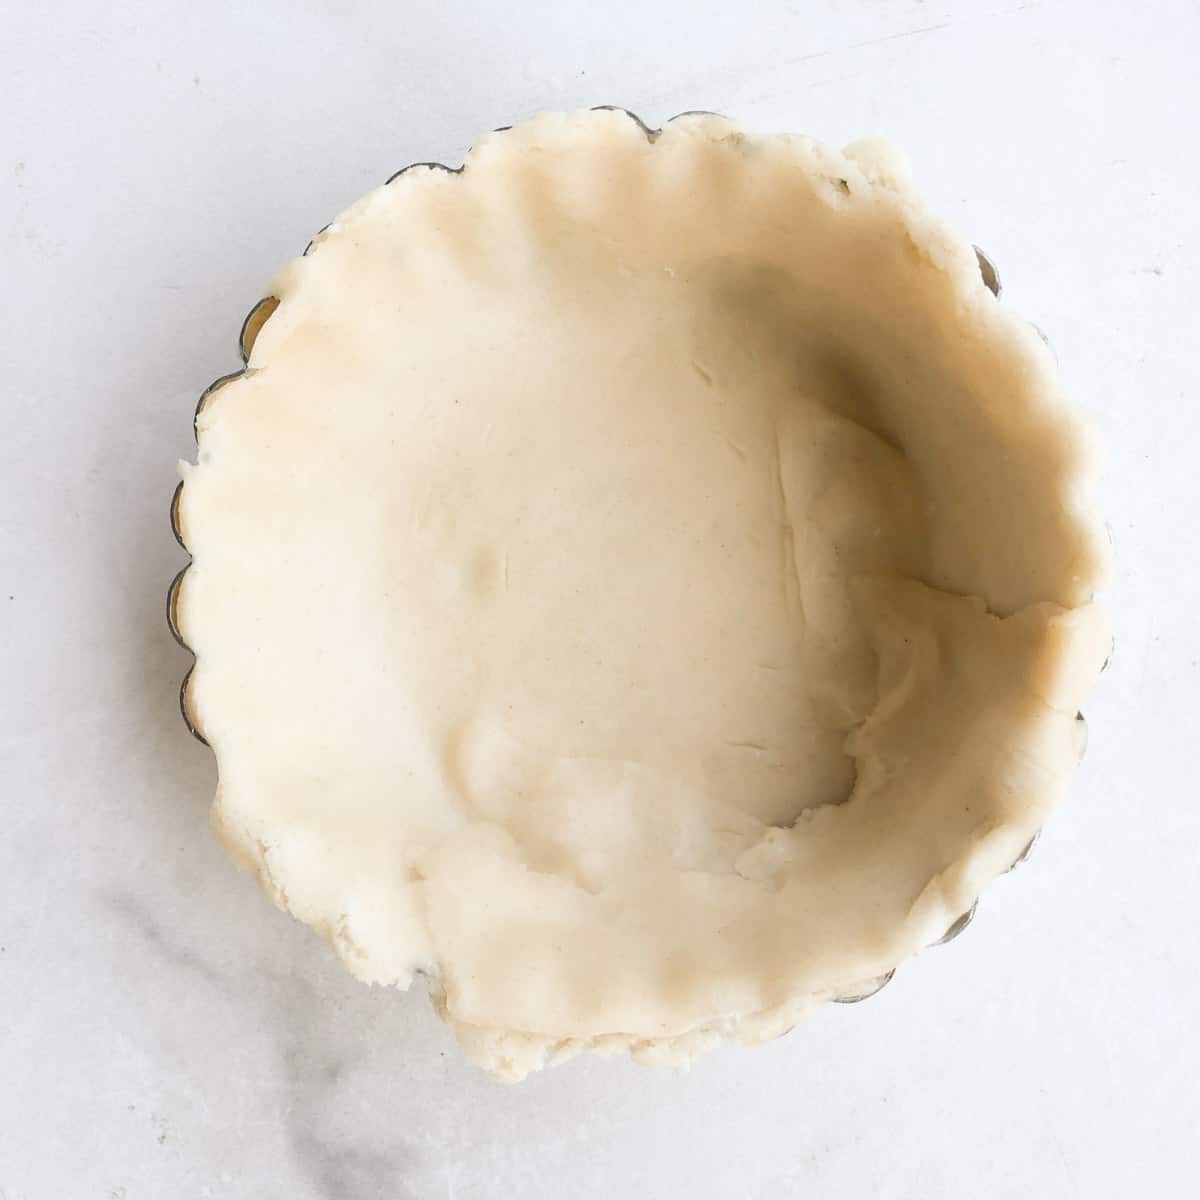 Unbaked pie crust in 4-inch tart pan.